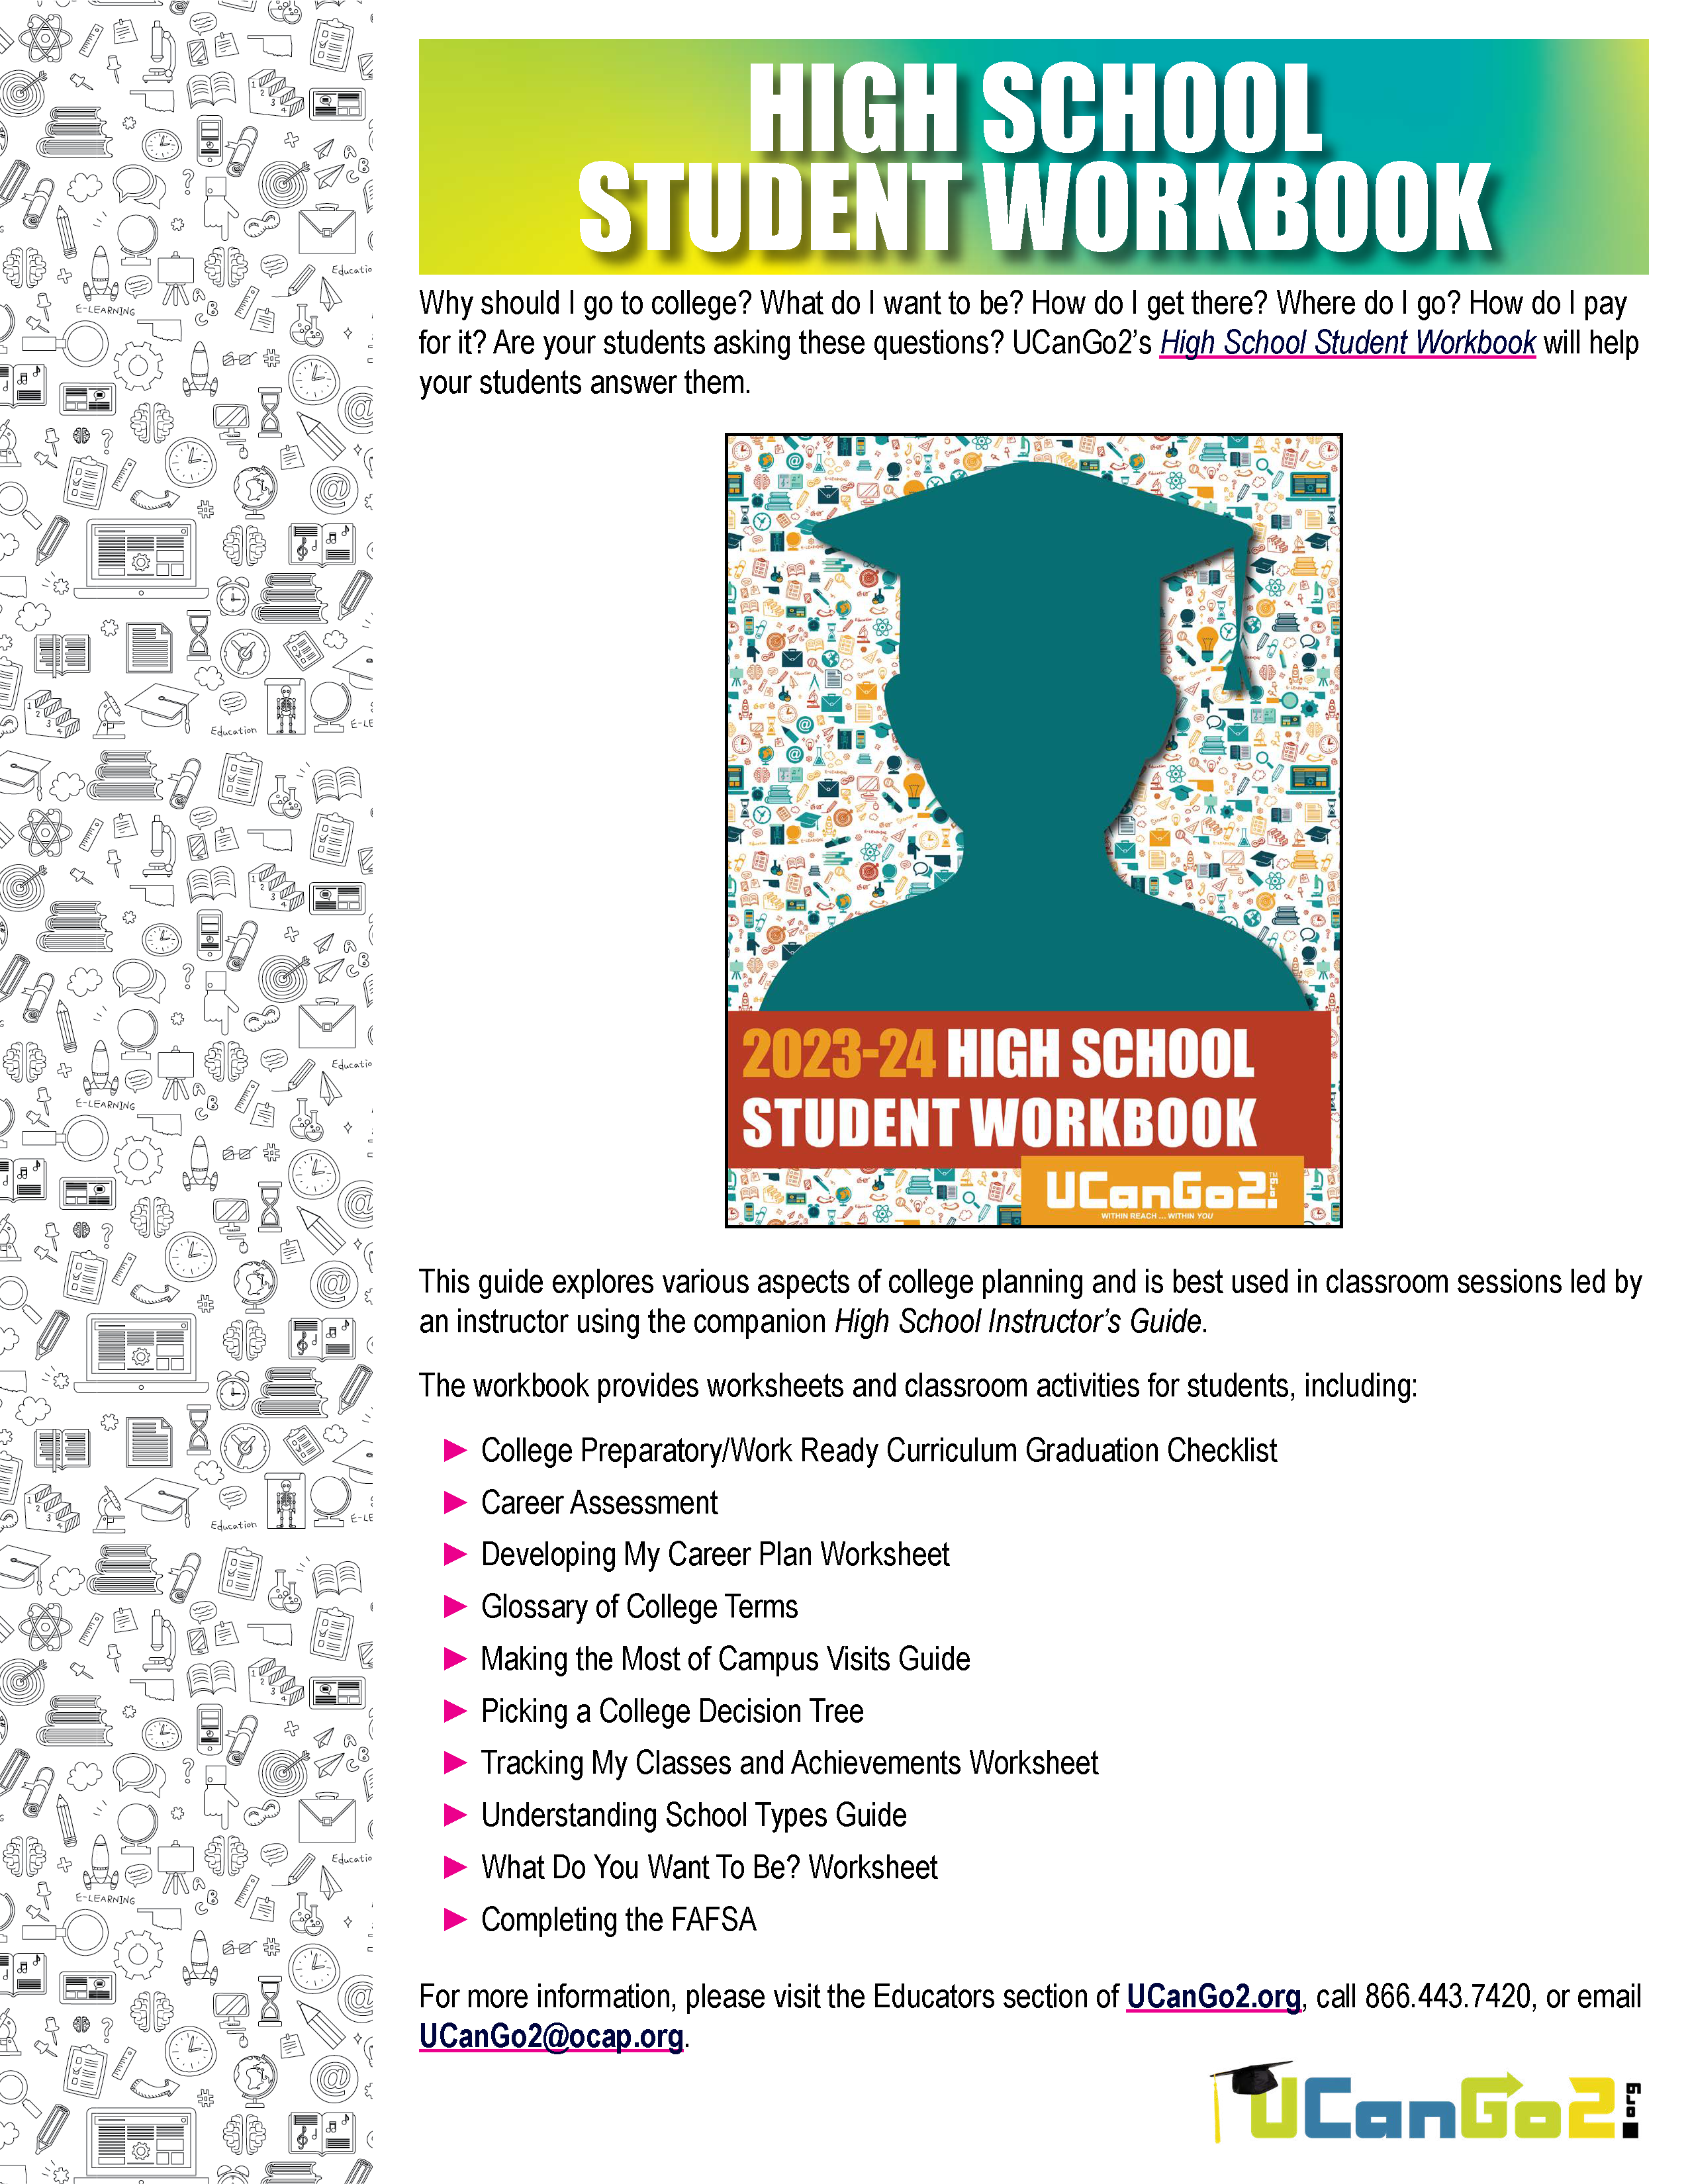 PDF of High School student workbook flyer